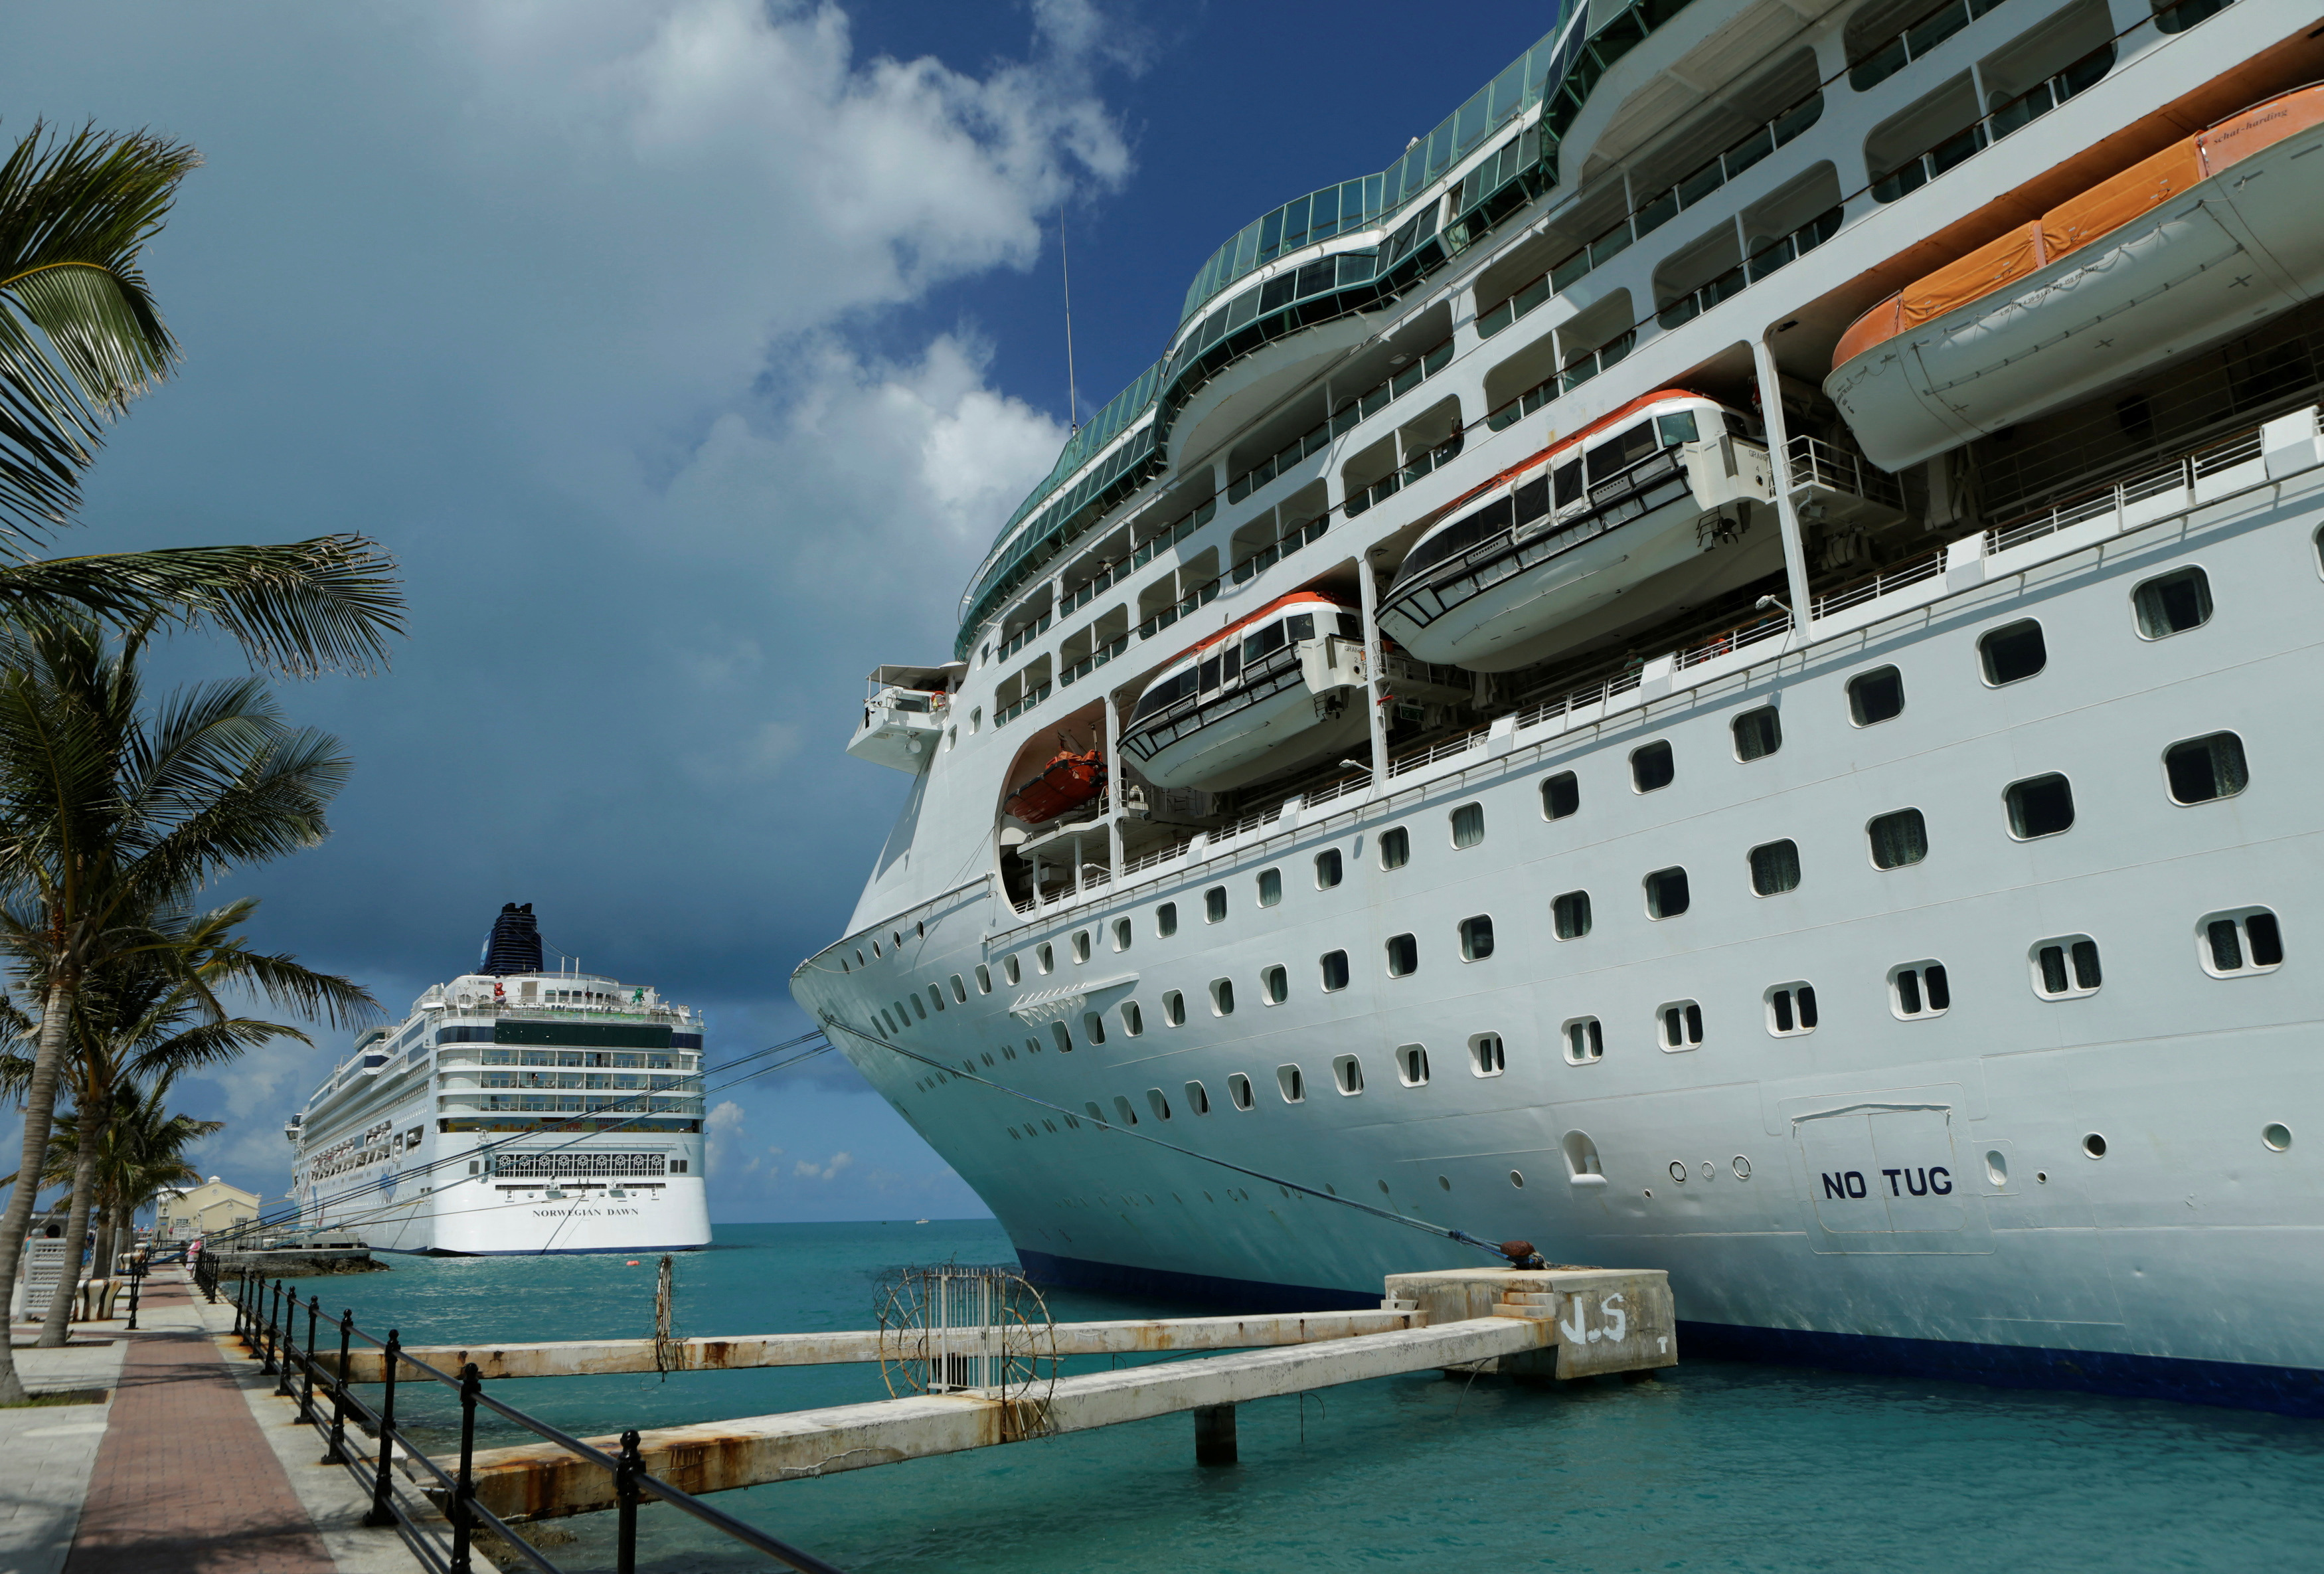 Cruise ships Norwegian Dawn and Grandeur of the Seas are seen in port near Hamilton Bermuda